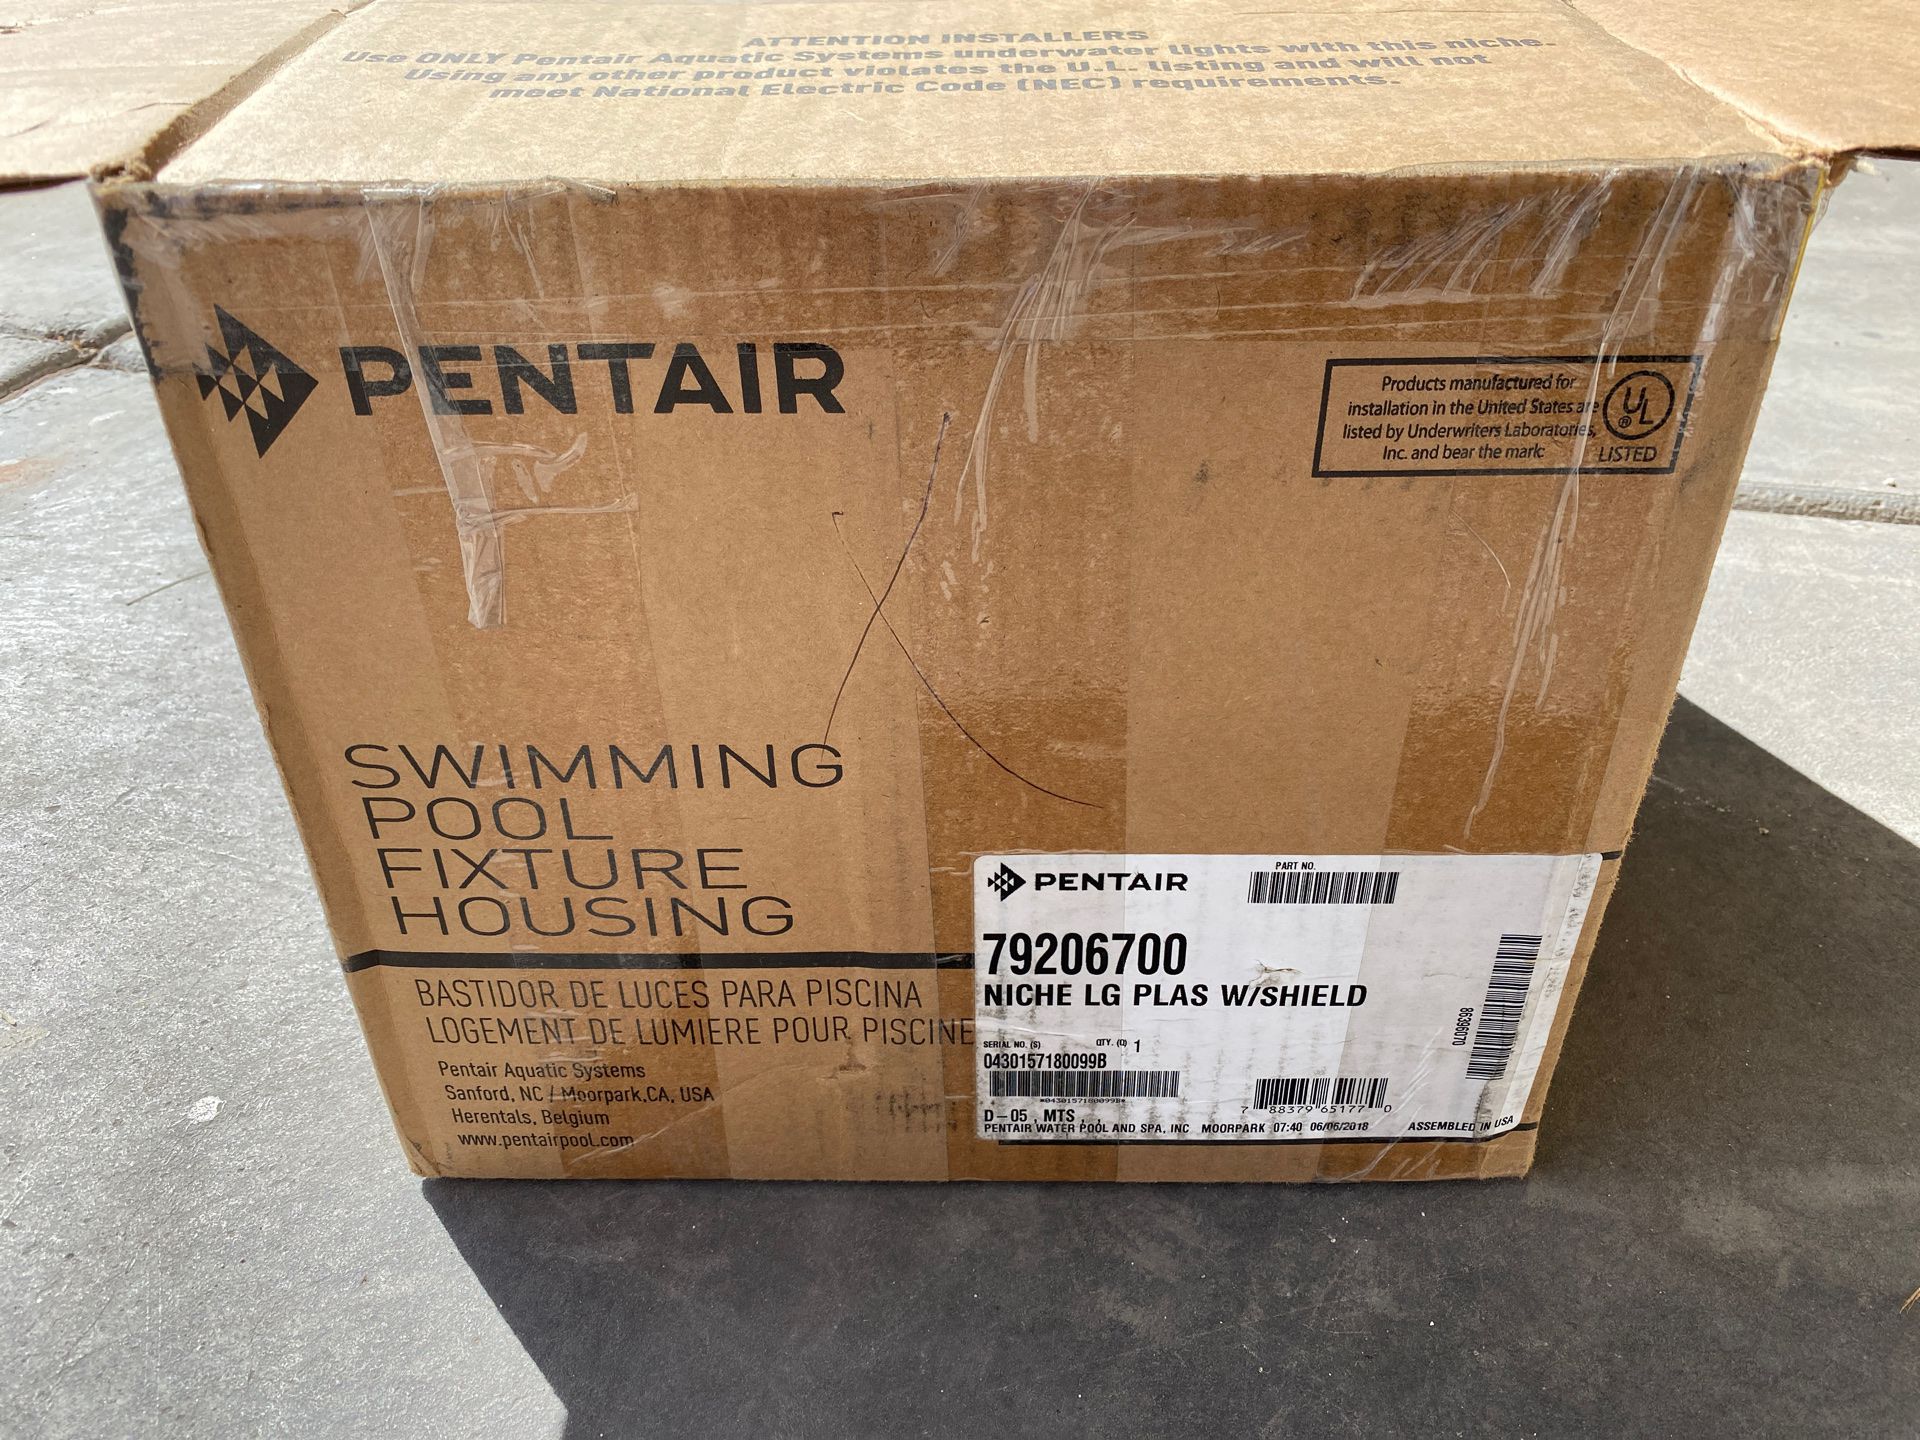 Pentair swimming pool fixture housing